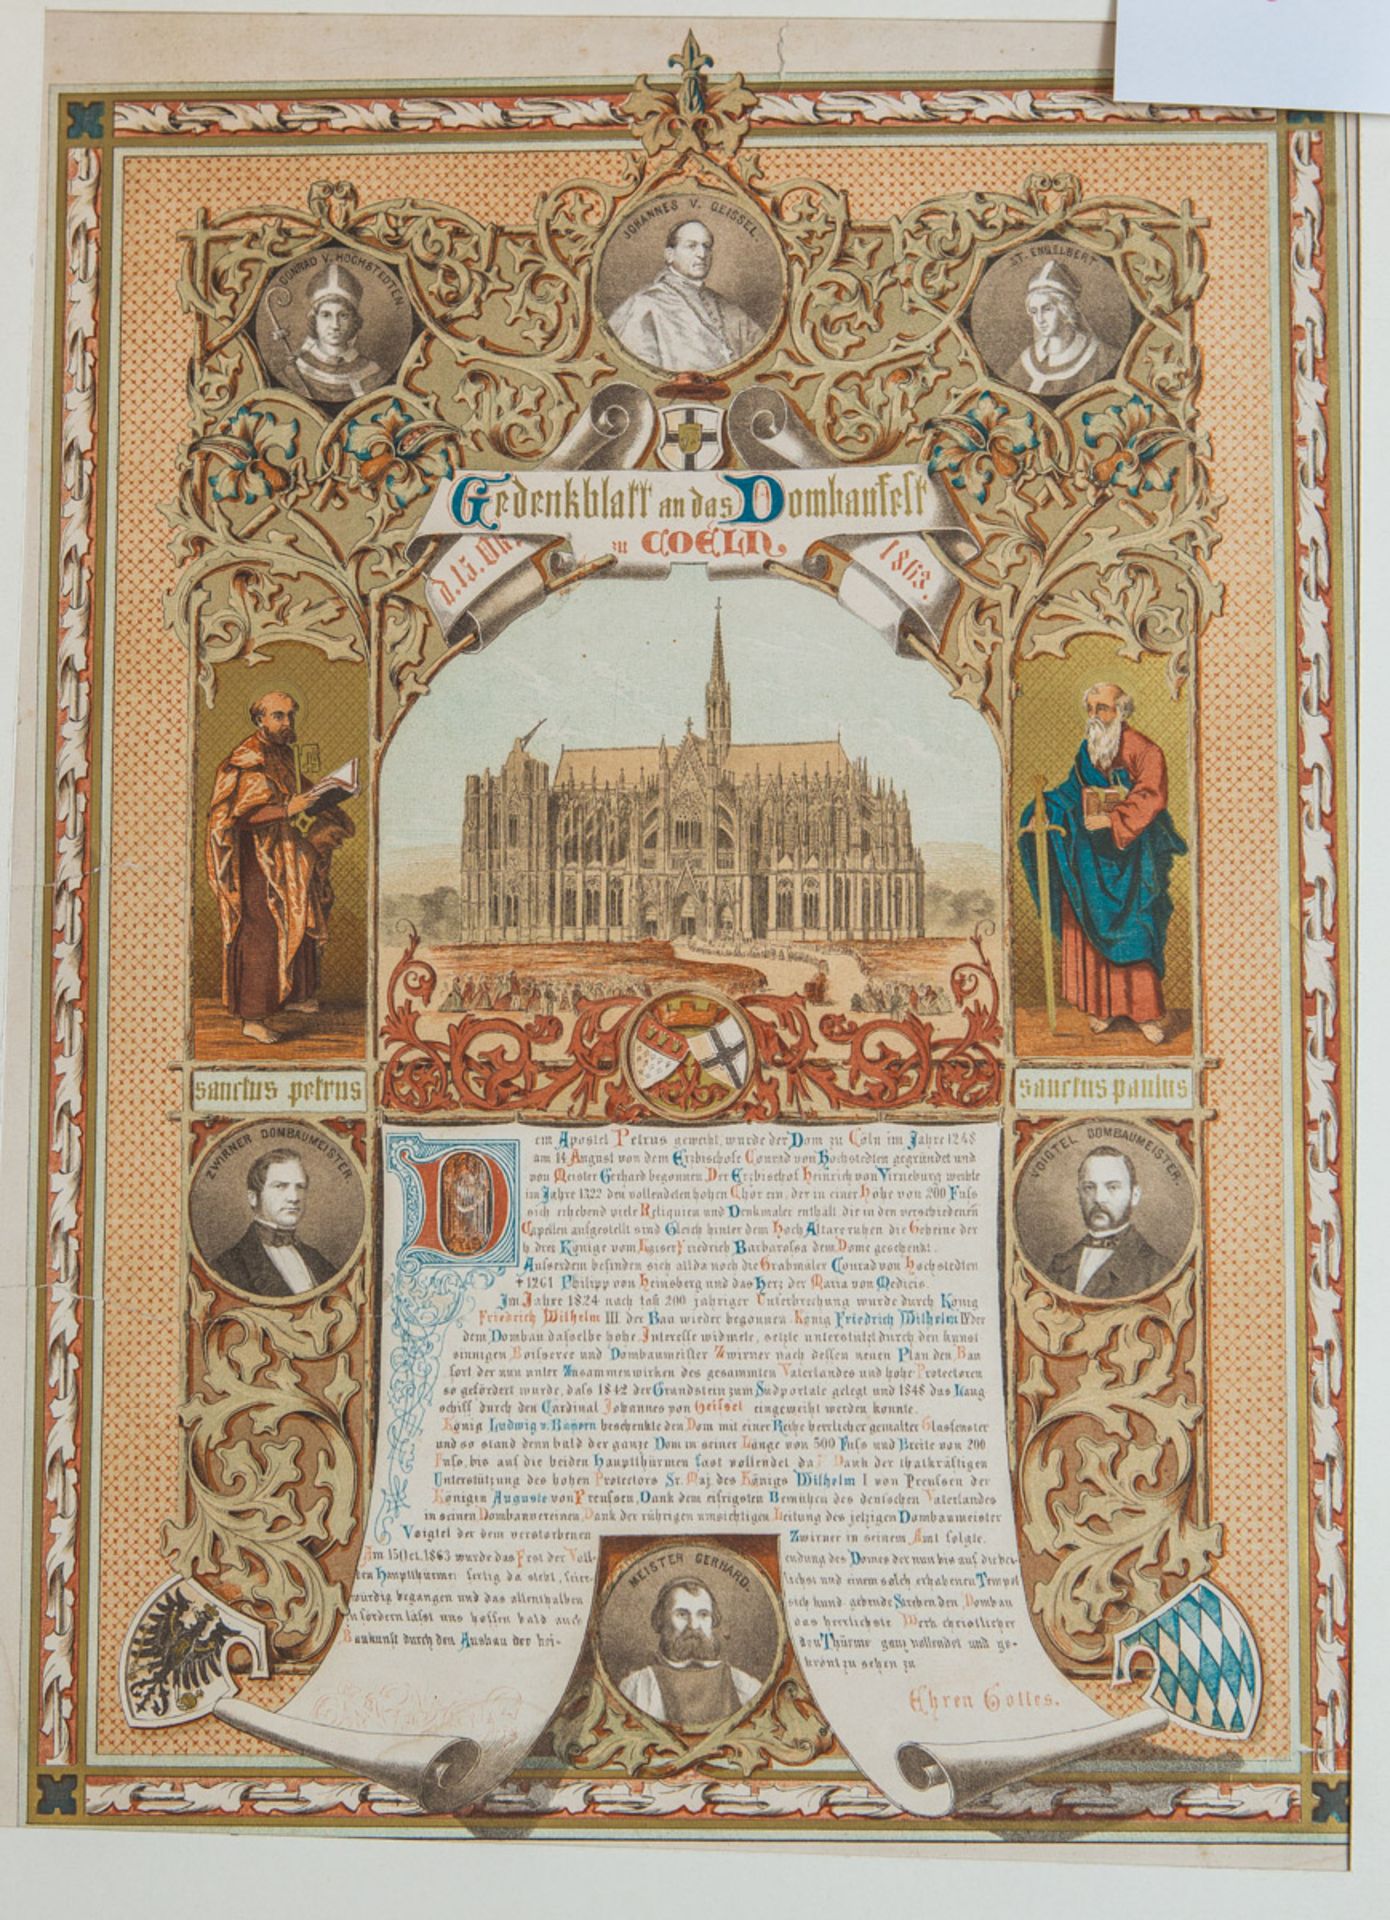 Künstler/in unbekannt (19. Jh.), Gedenkblatt an das Dombaufest d. 15. Okt. zu Coeln 1863